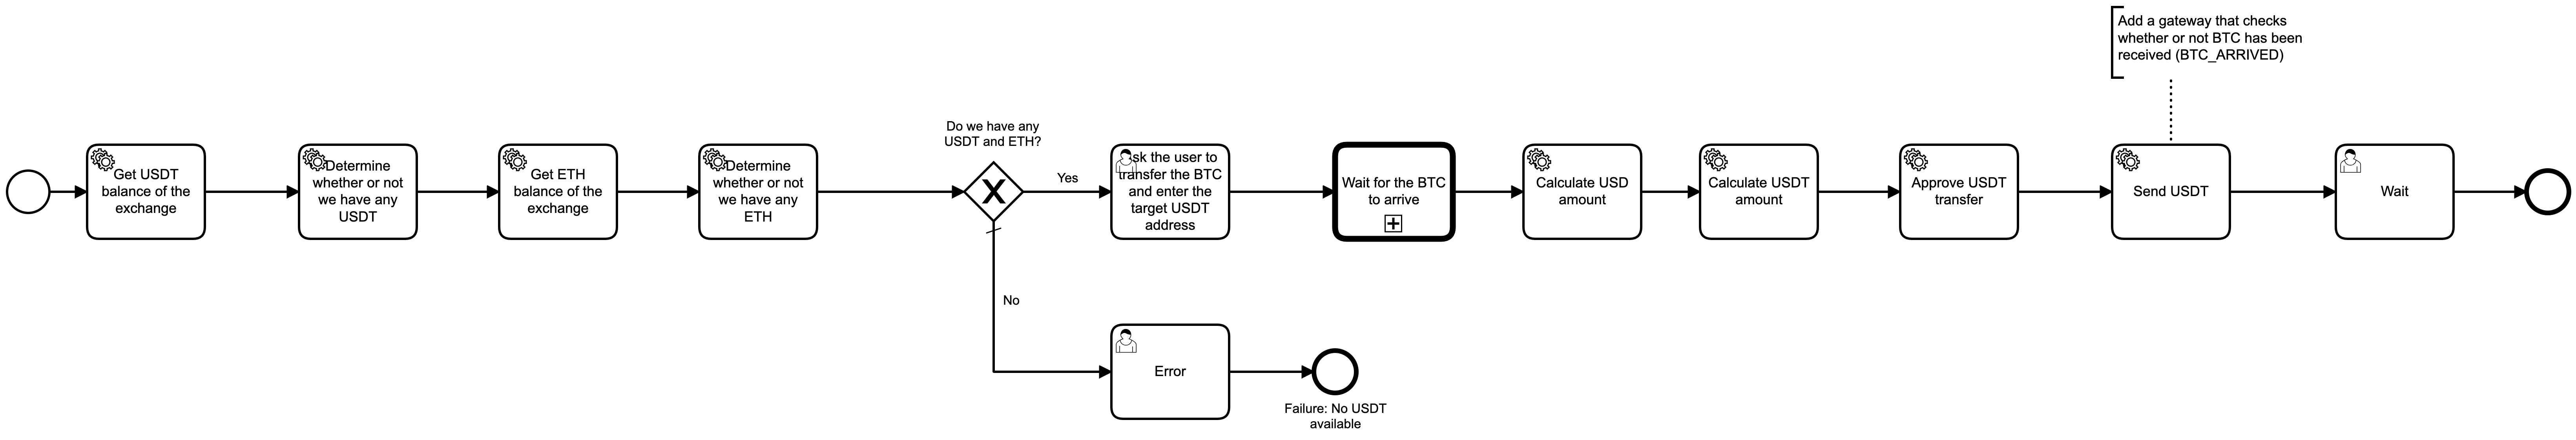 BPMN-схема процесса обмена Биткойна на Тезер